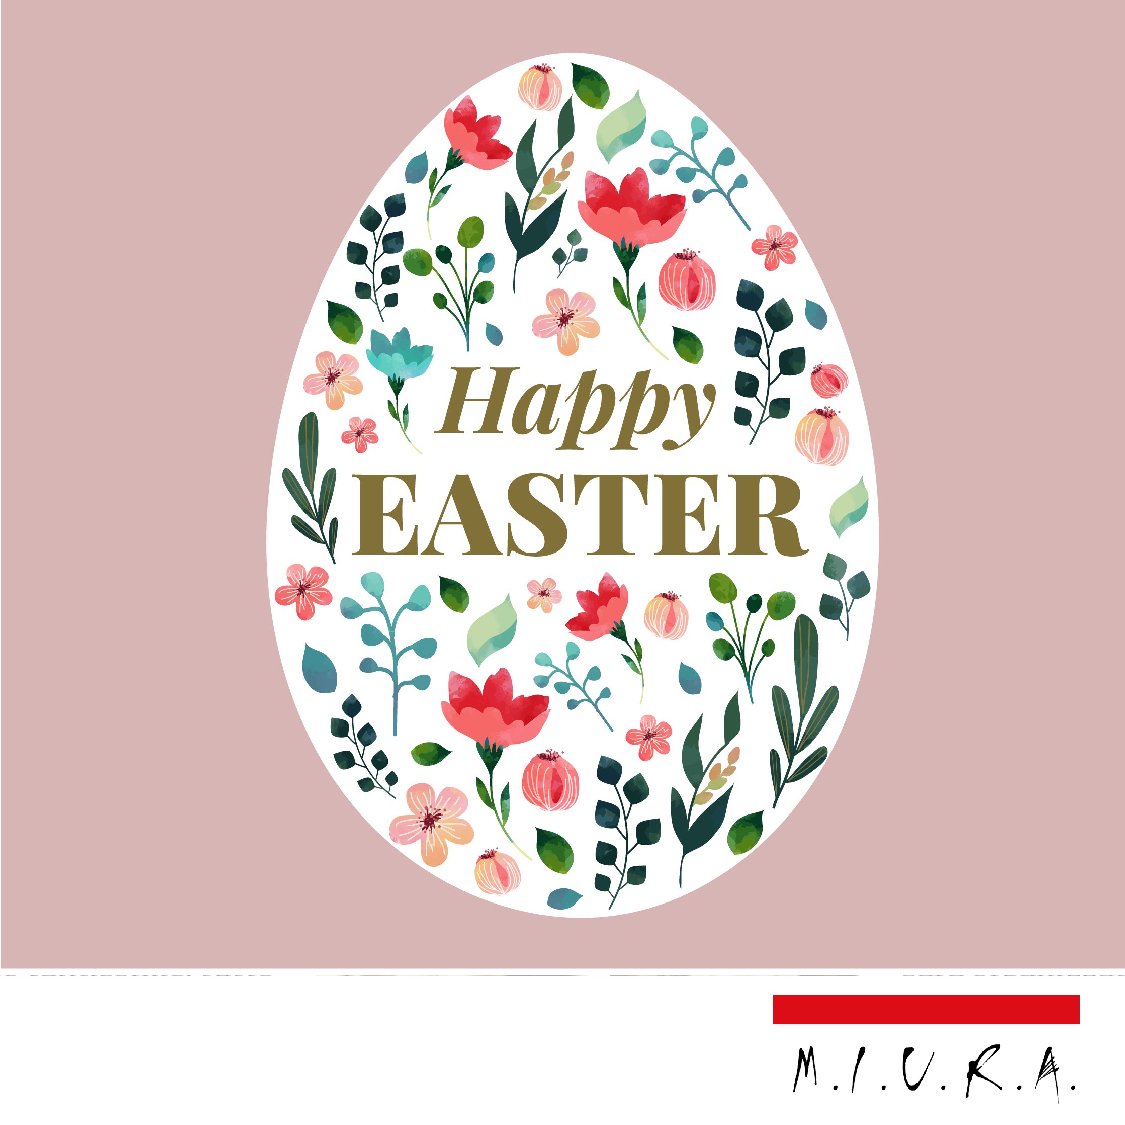 ... Happy Easter by MIURA Team 🐣💐

#miura #innovazione #innovation #digitaltransformation #digitallife #inspiration #lifehacks #makeanimpact #bethechange